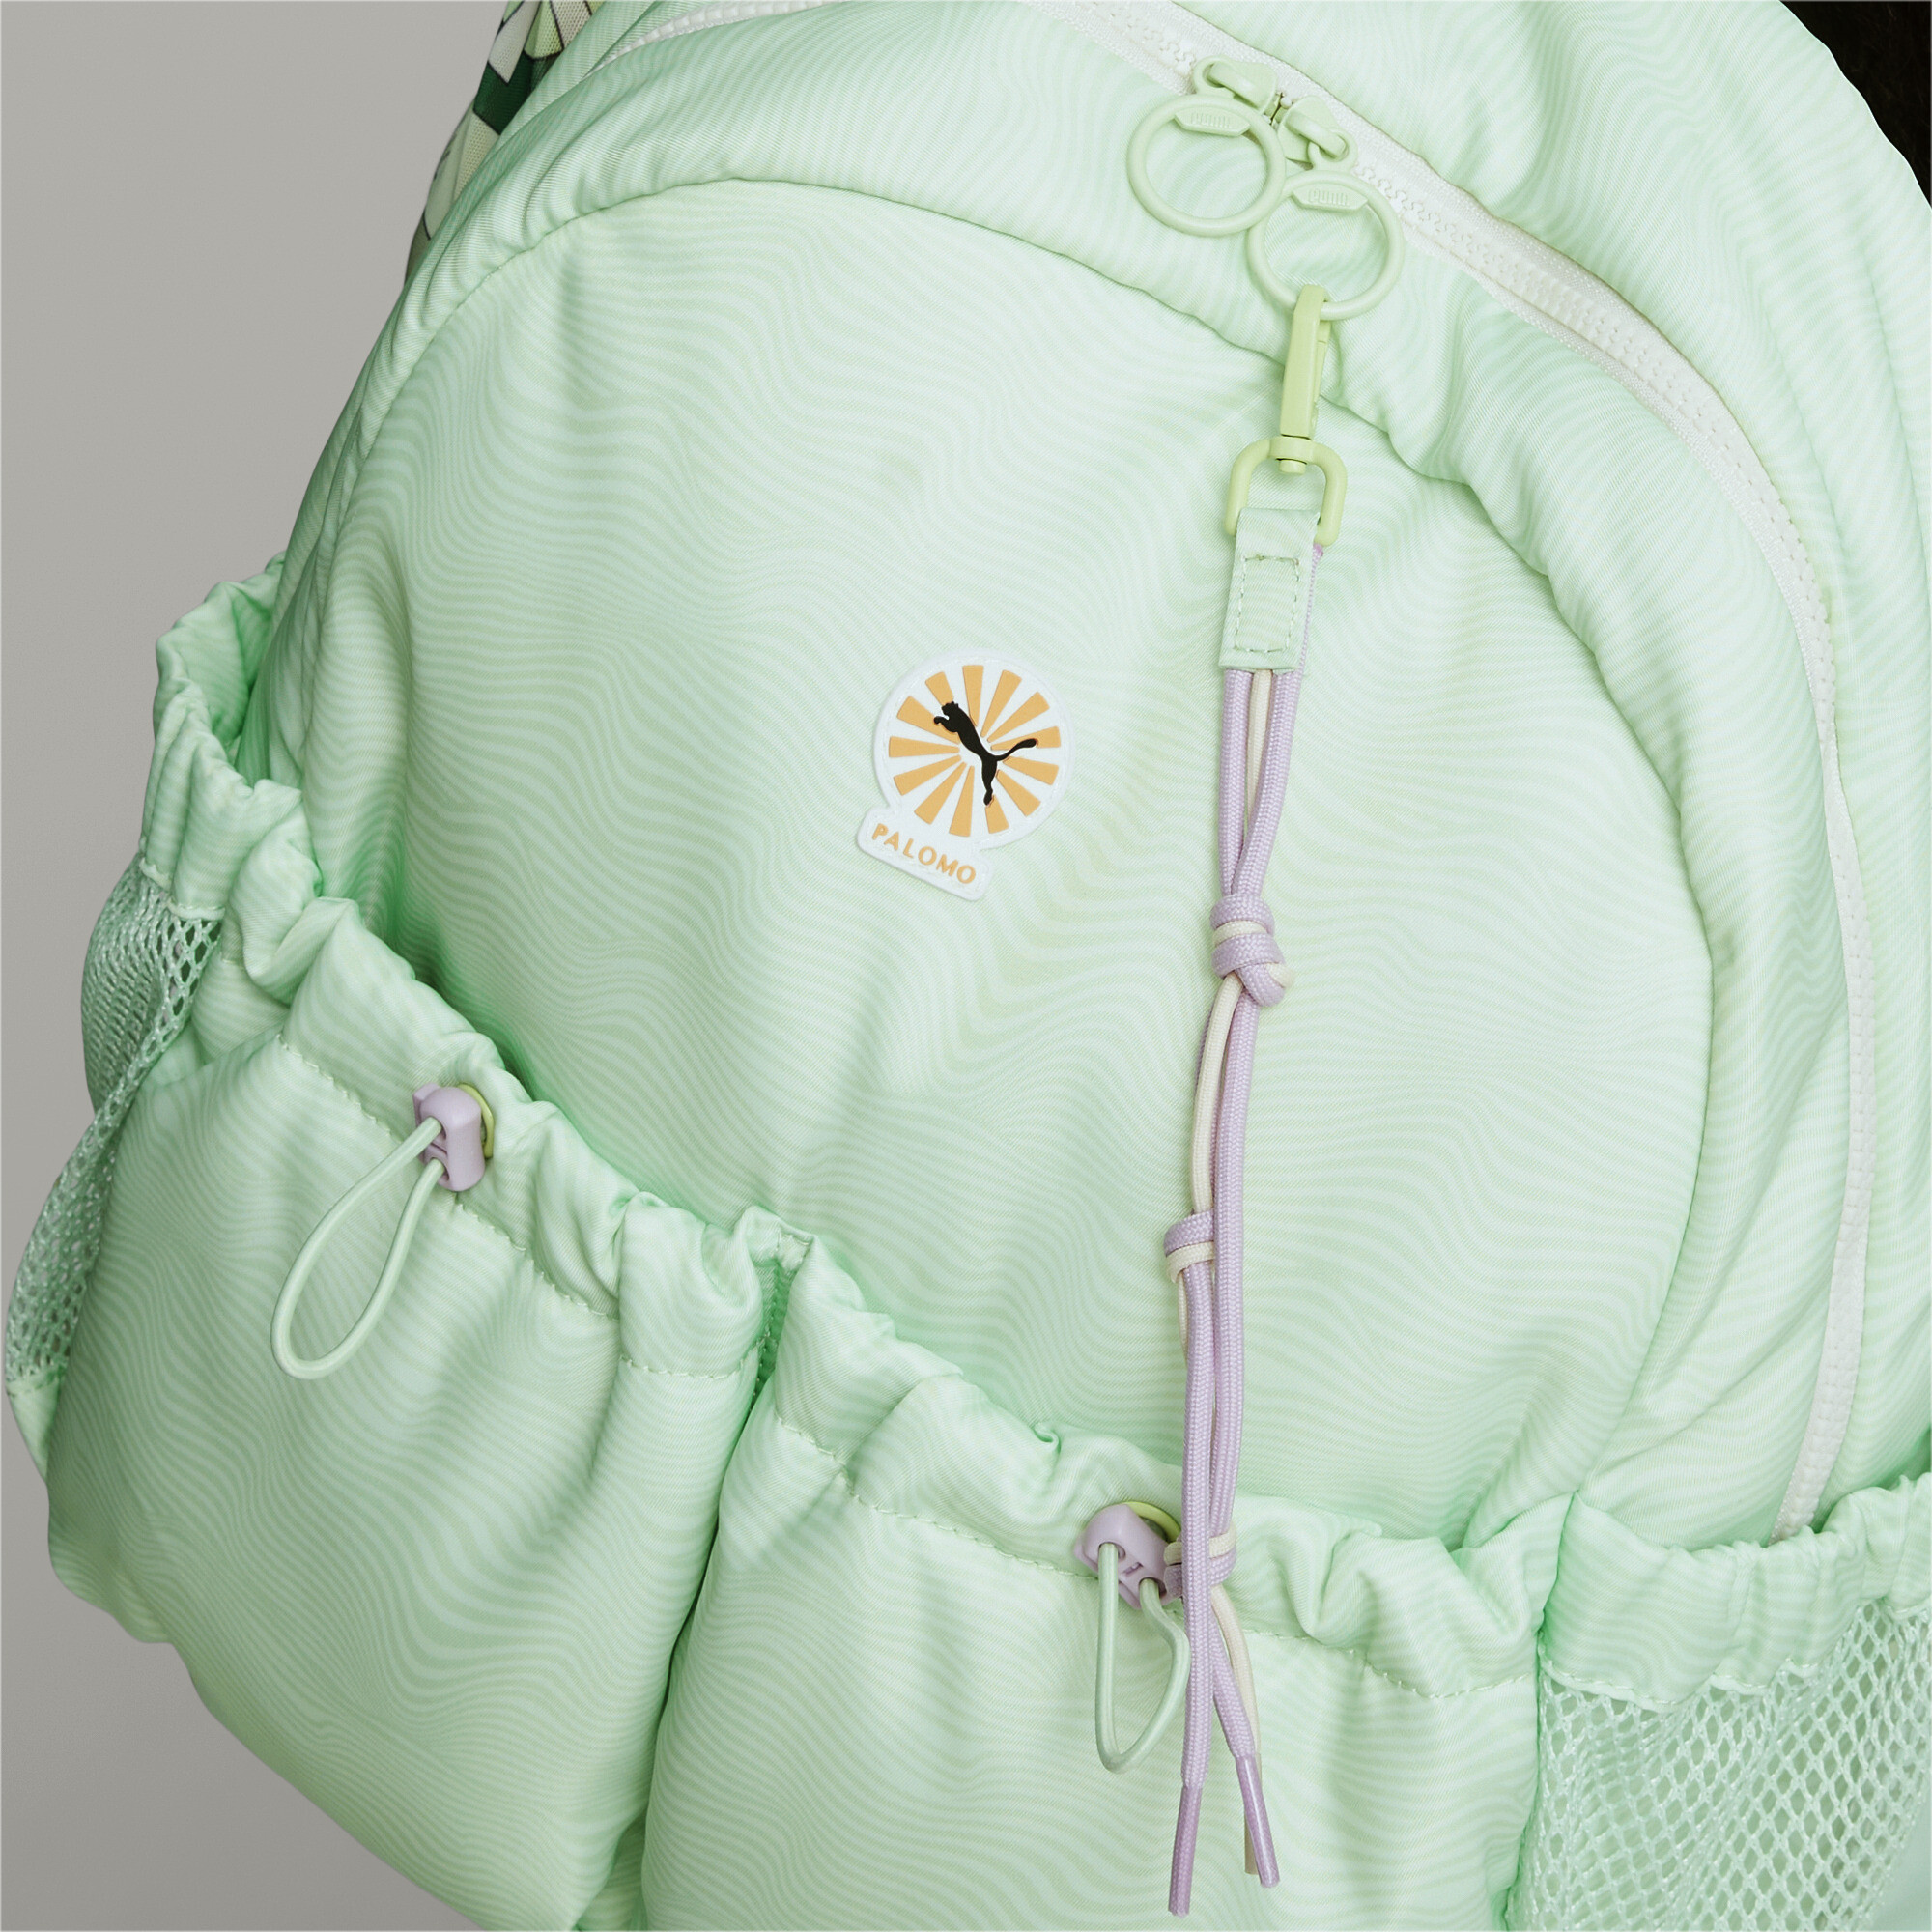 Puma X PALOMO Backpack, Green, Accessories